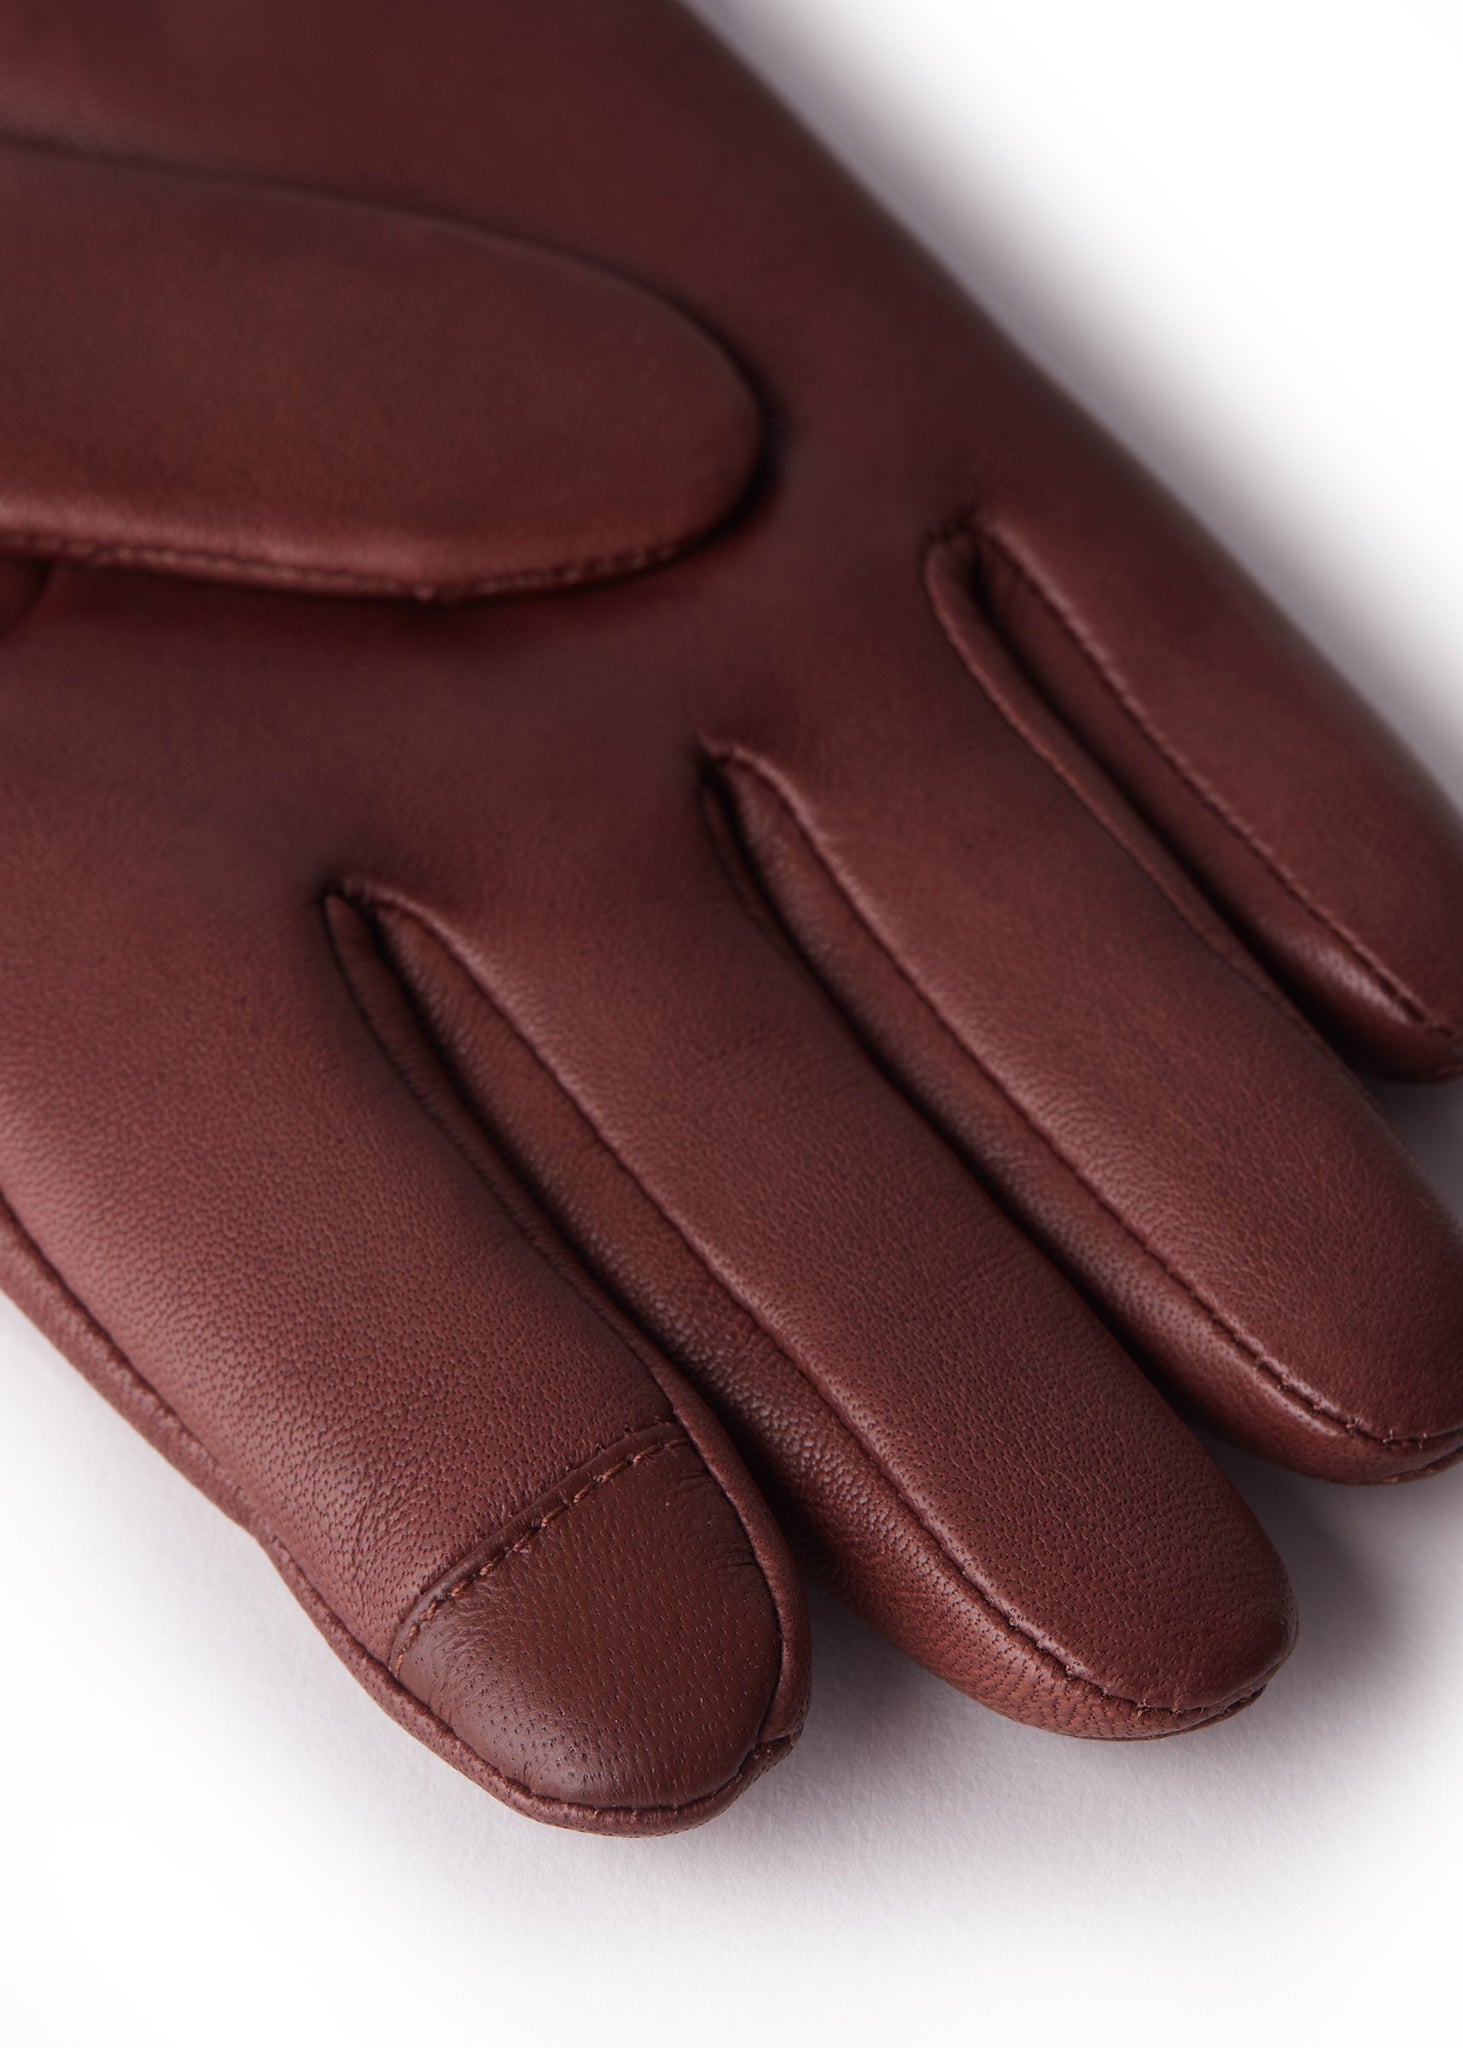 Monogram Leather Gloves (Chocolate)